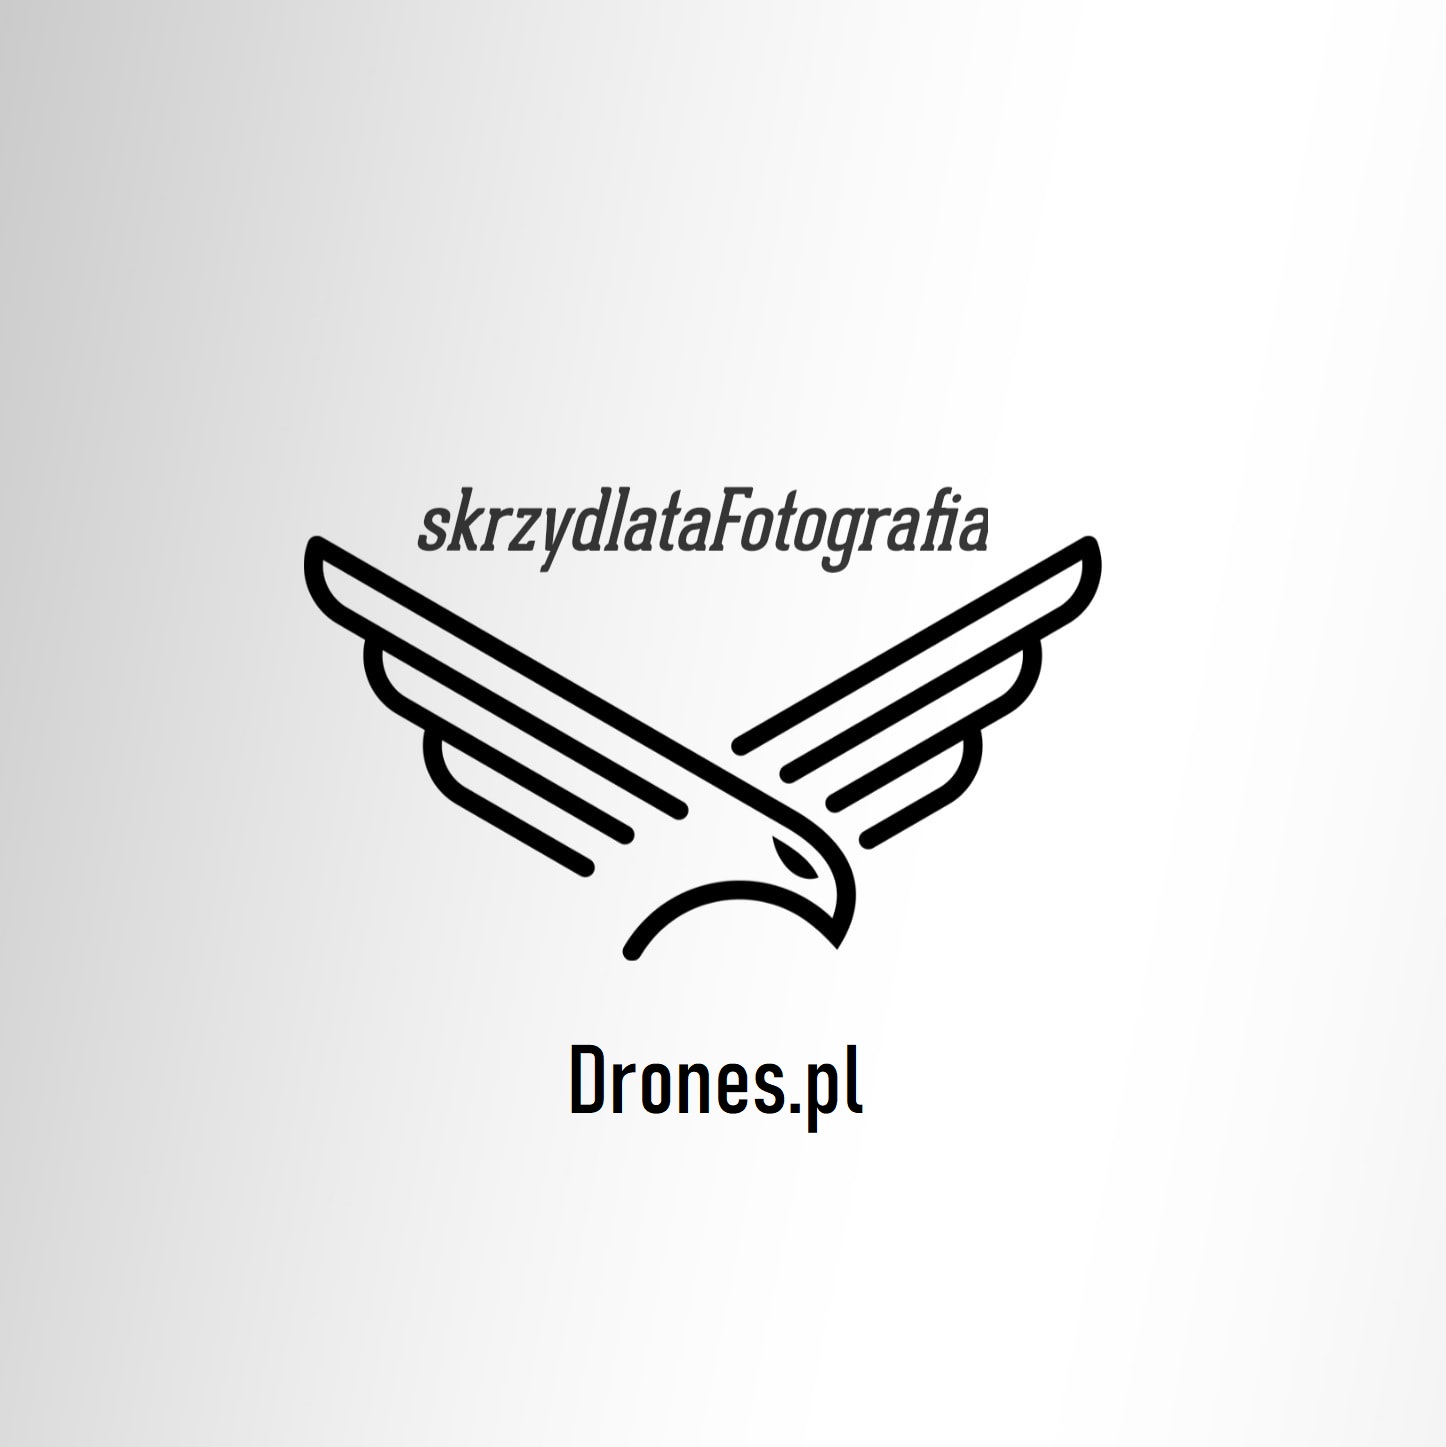 drones.pl